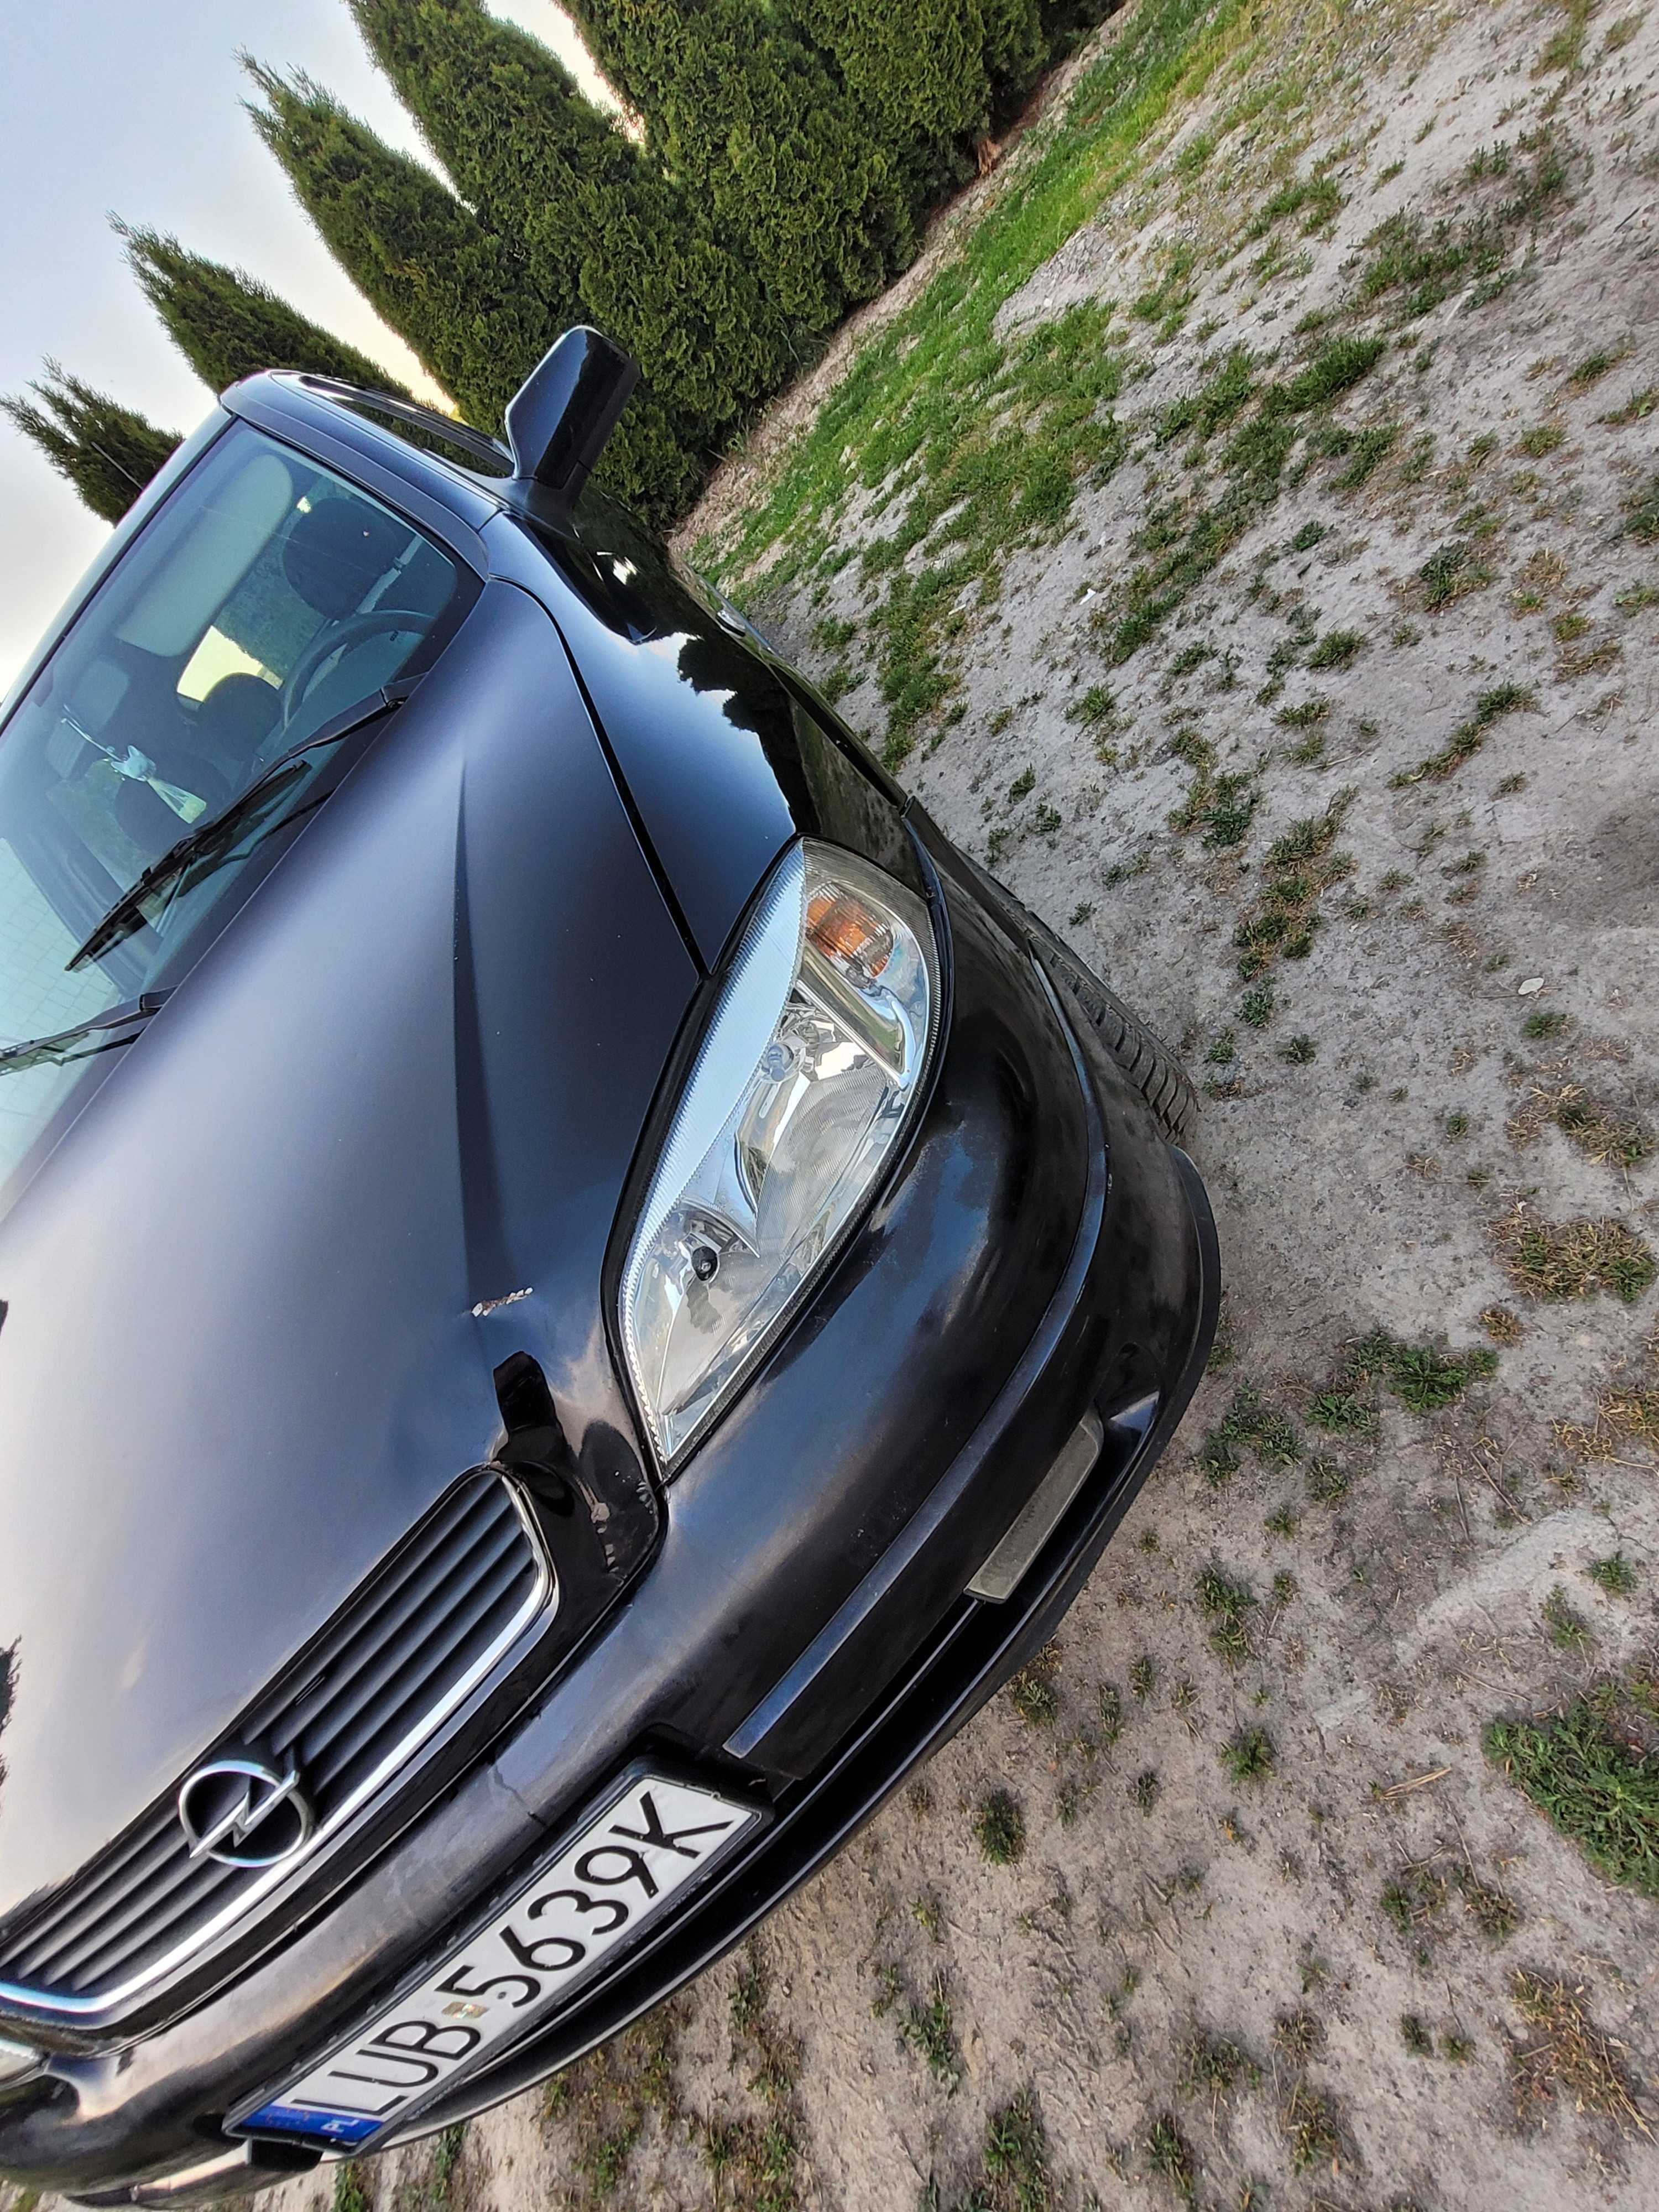 Opel Astra G 2002